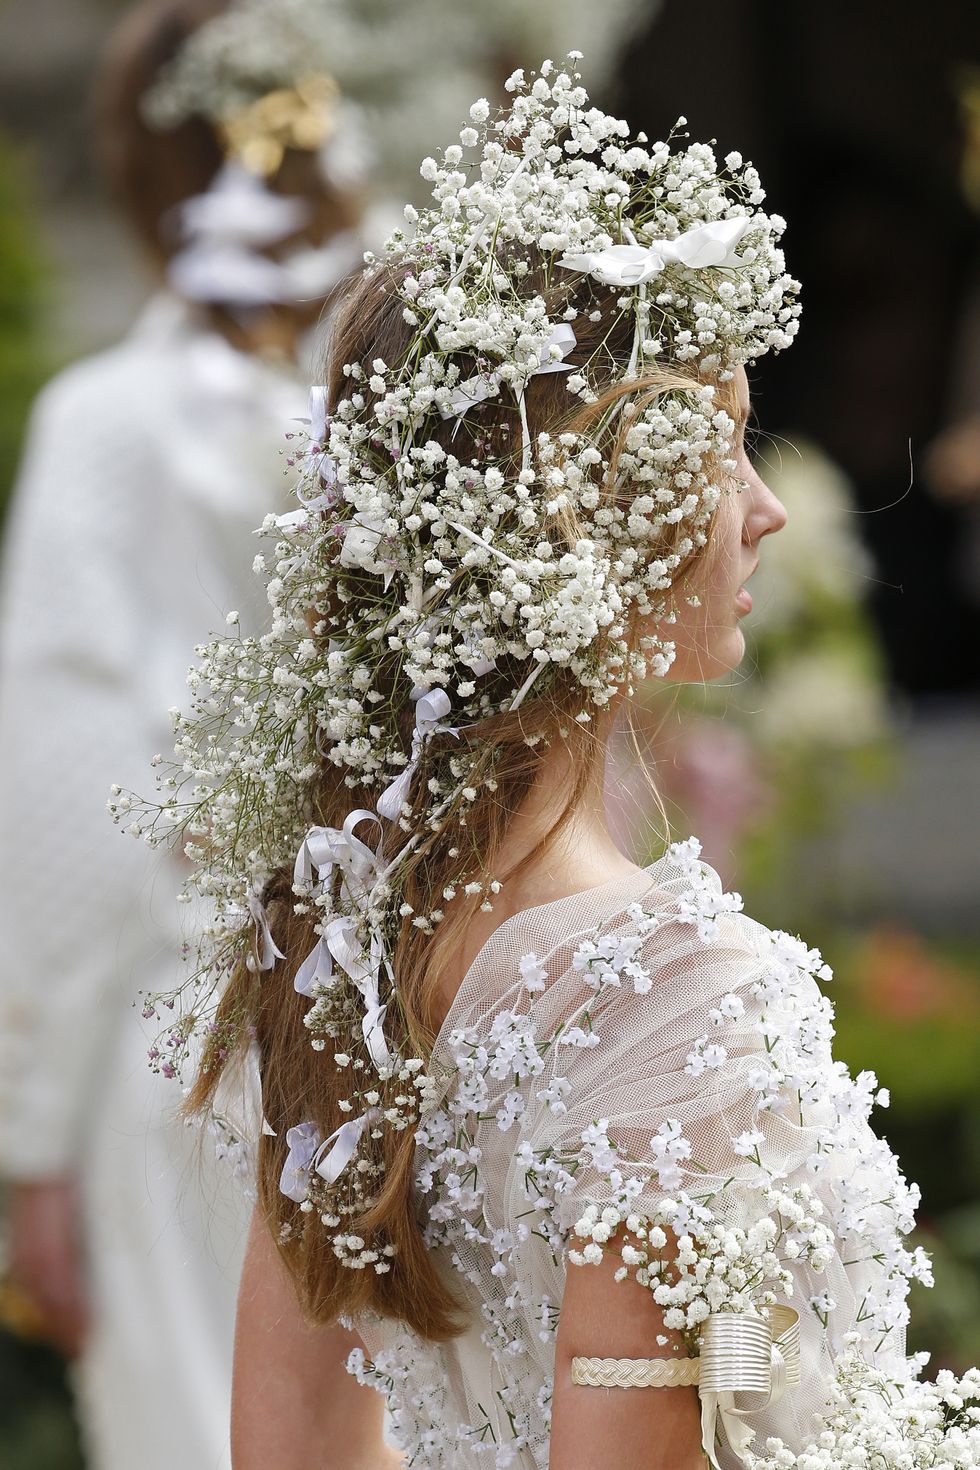 Photograph, Dress, Headgear, Petal, Wedding dress, Bridal clothing, Hair accessory, Headpiece, Bride, Embellishment, 